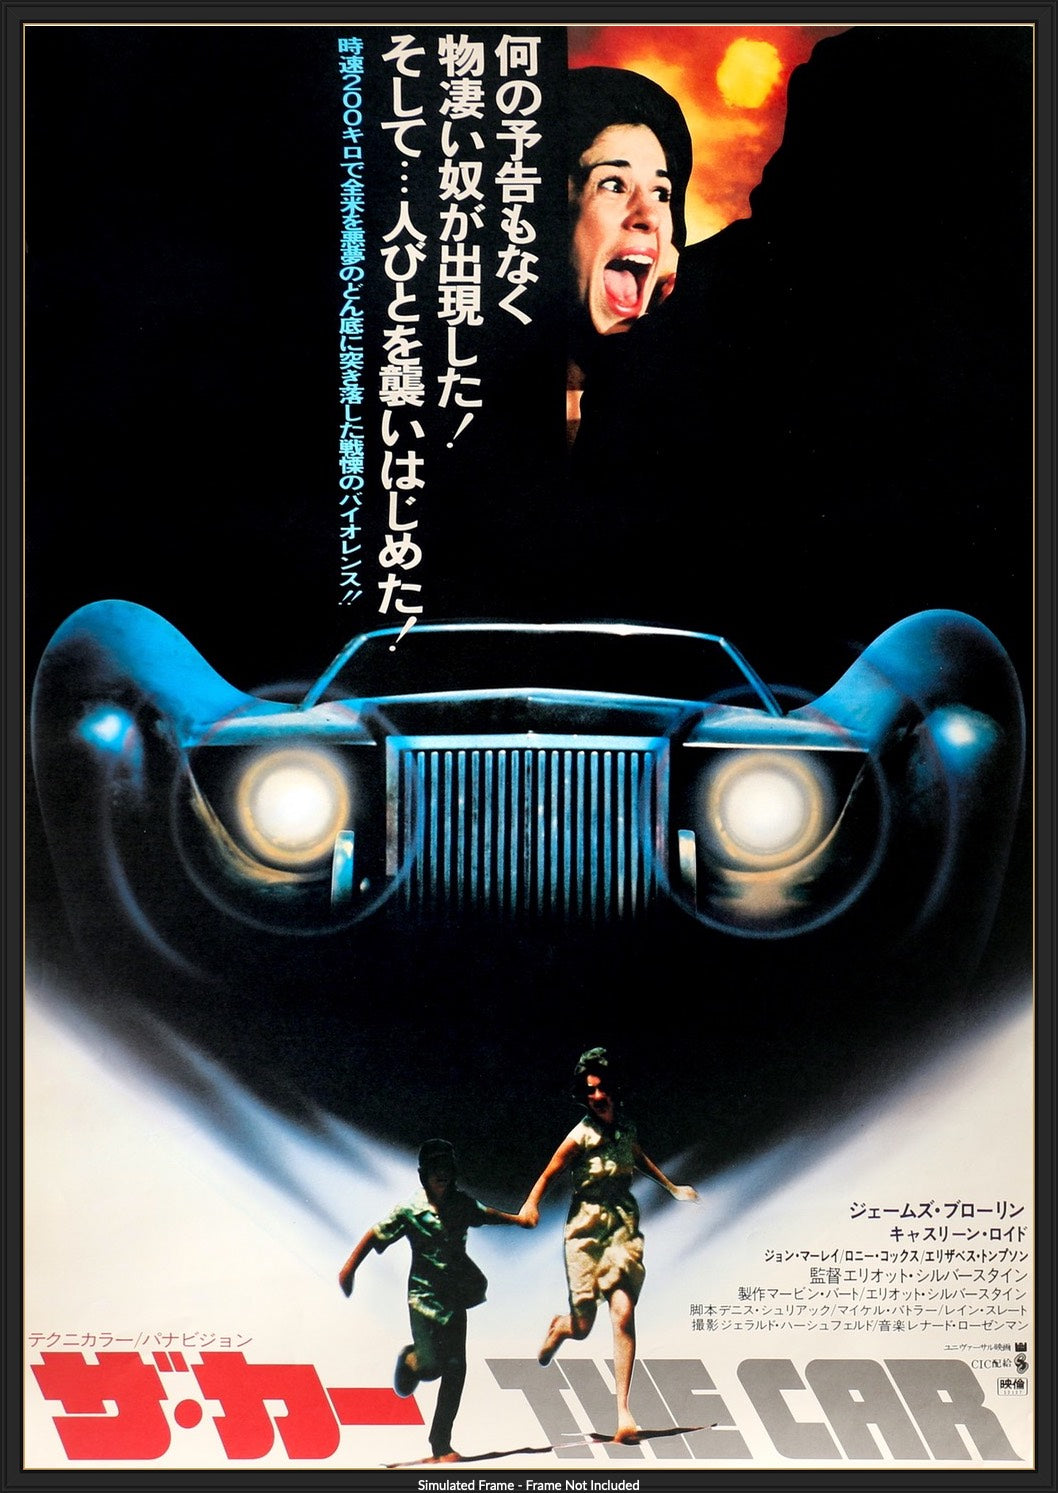 Car (1977) original movie poster for sale at Original Film Art